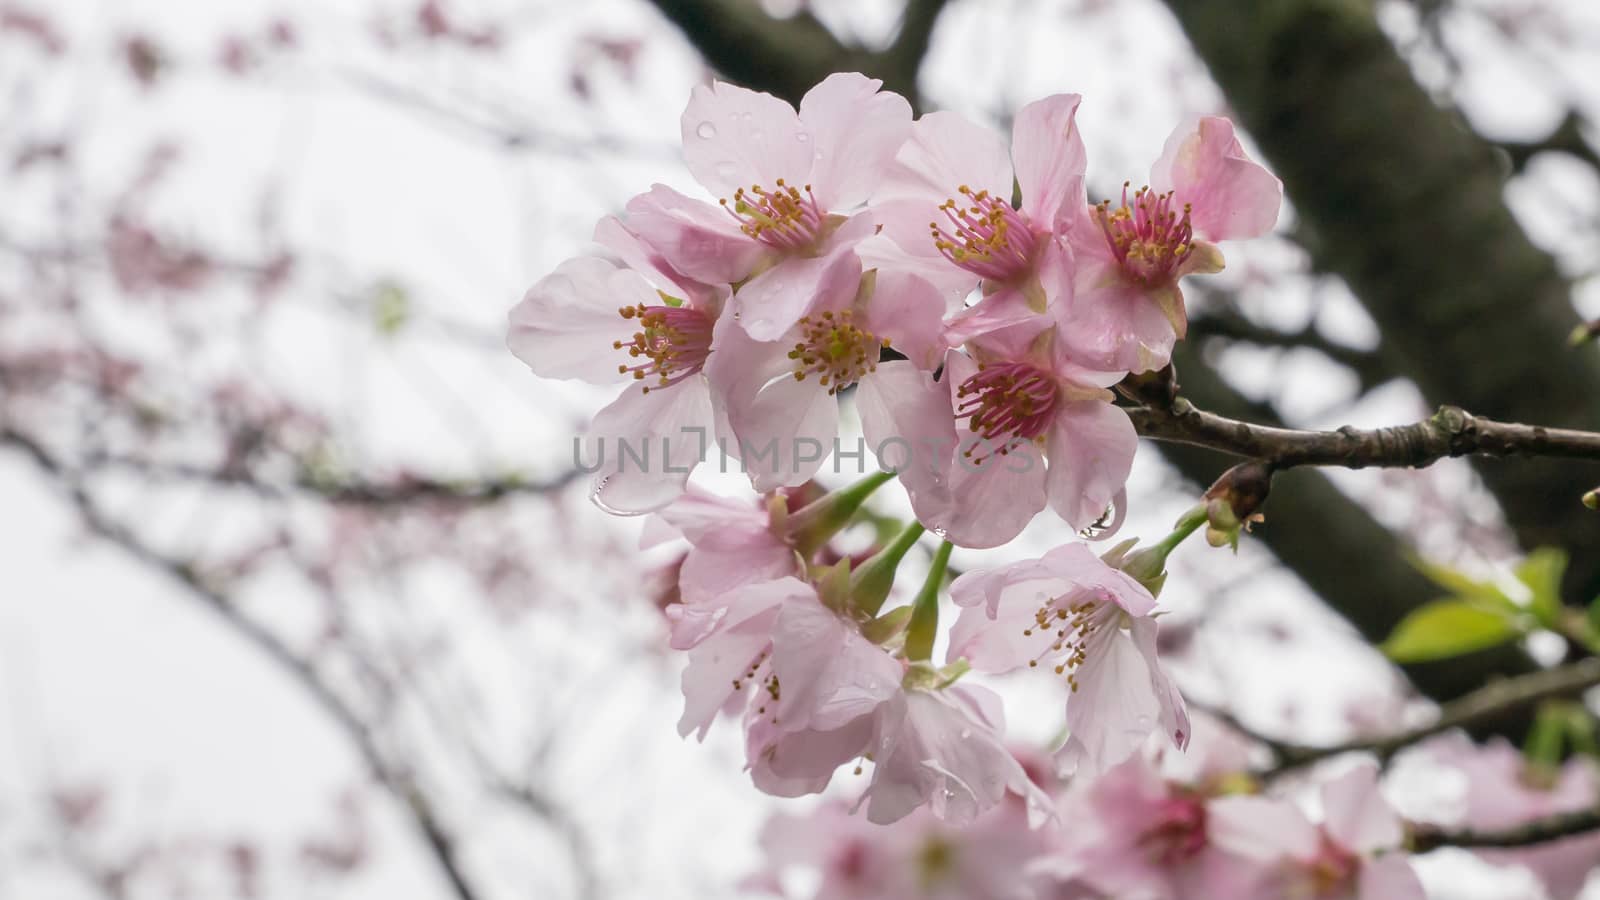 The close up of beautiful pink sakura flower branch (cherry blossom).